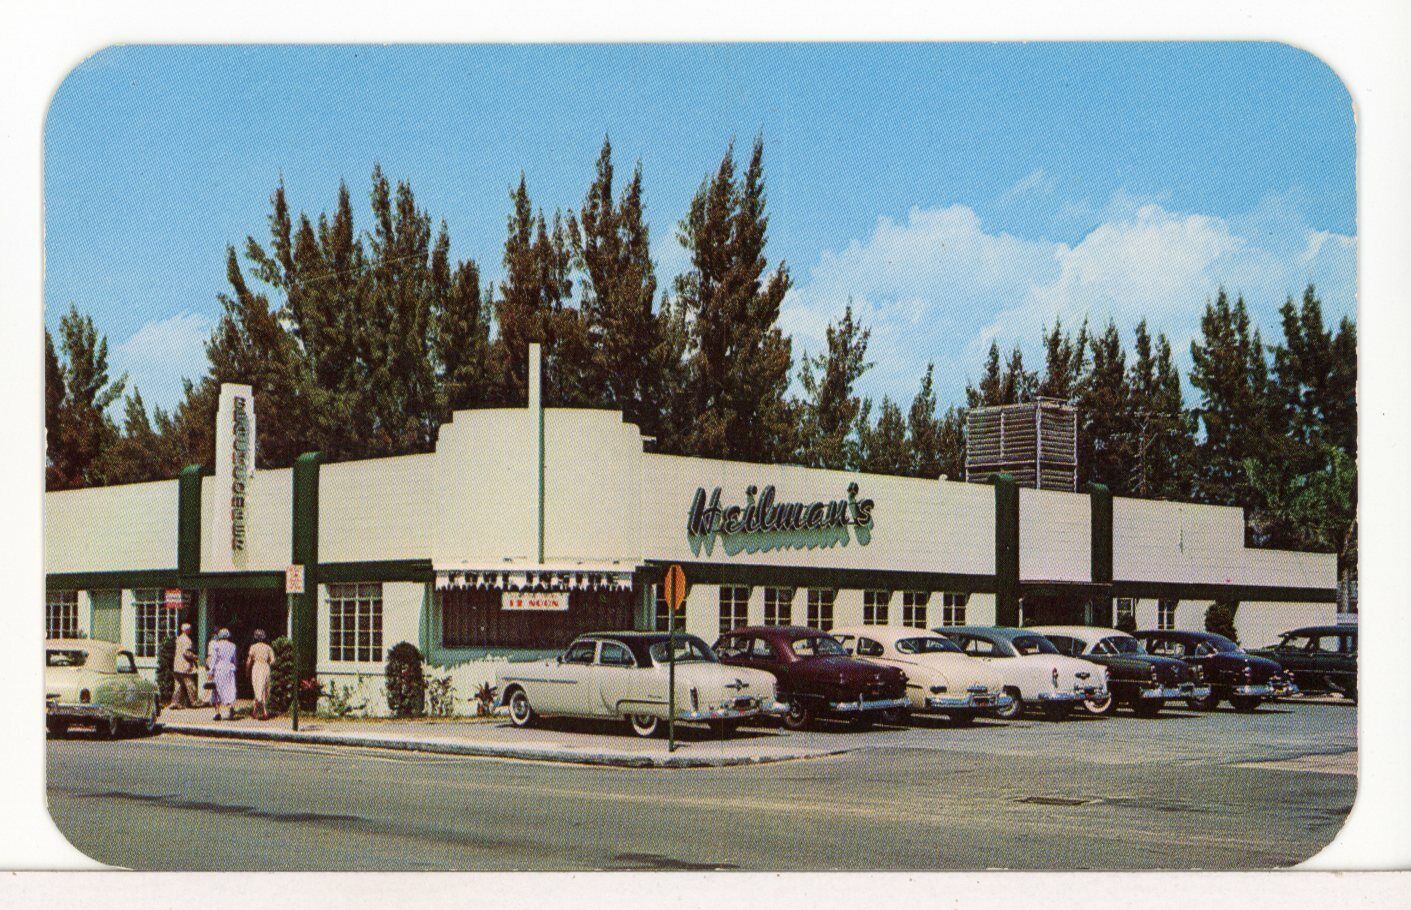 1954 - Herman's beachcomber Restaurant & Vintage Autos, Clearwater, FL Postcard